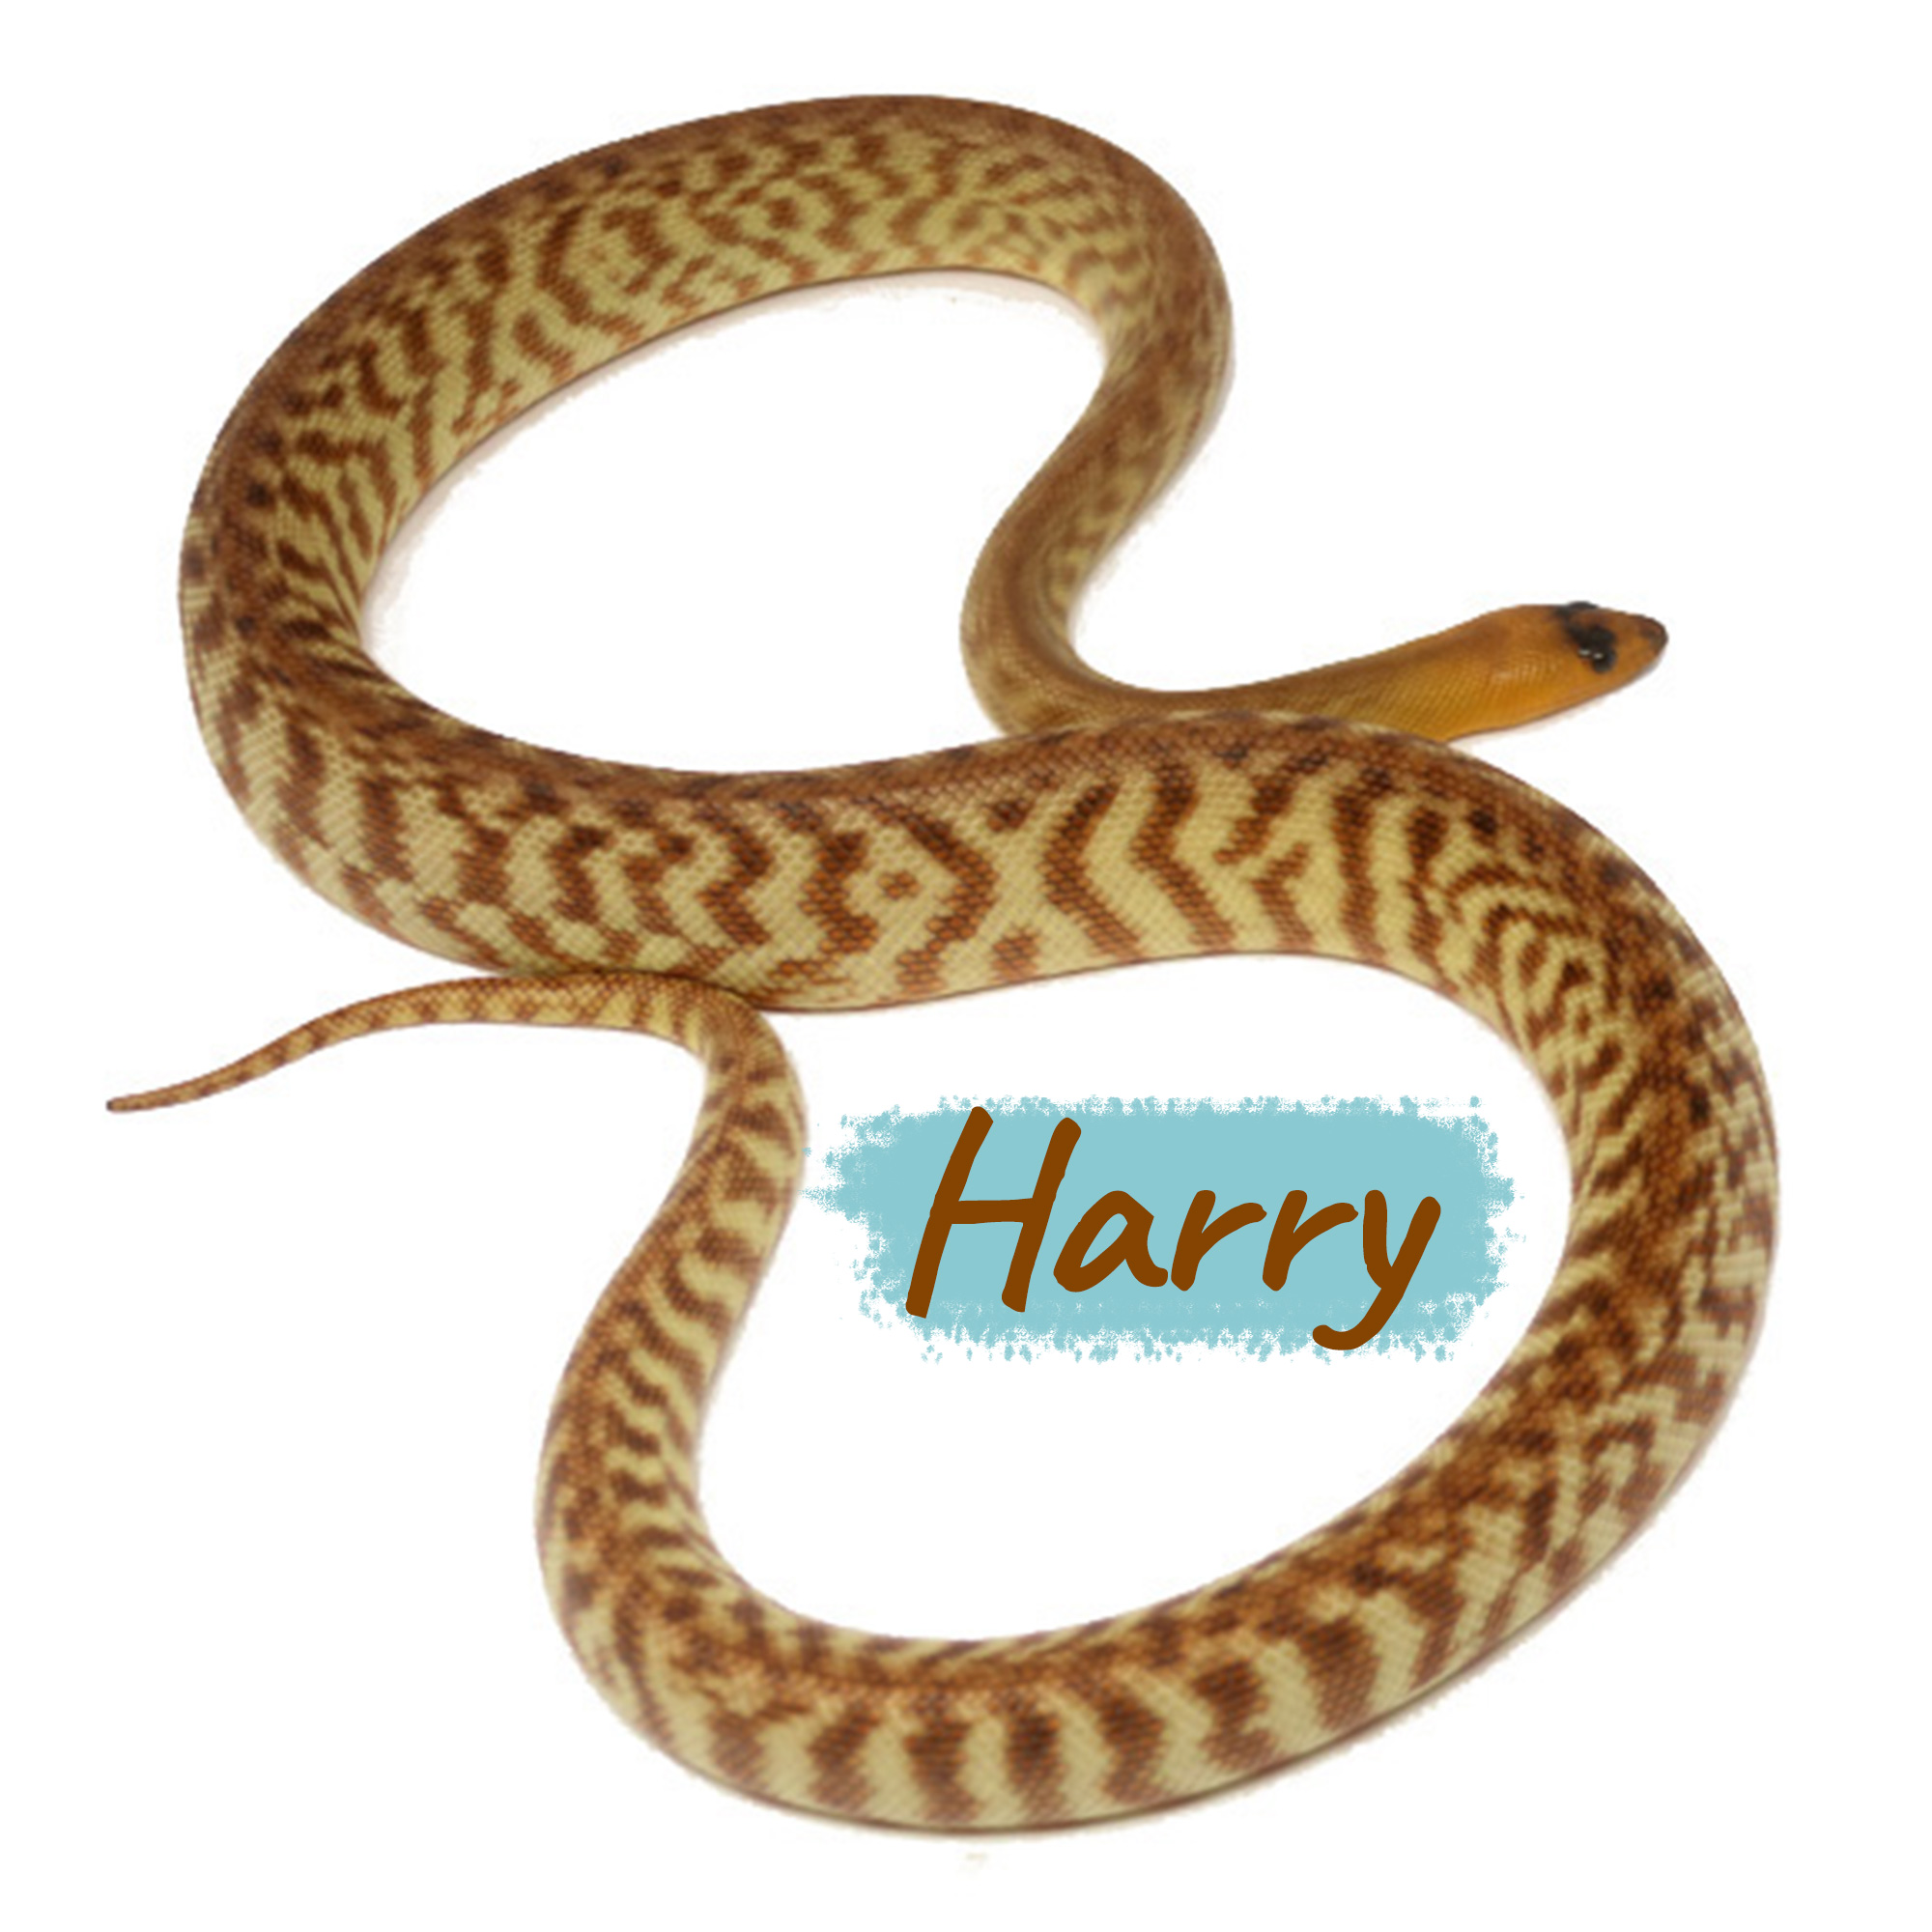 Harry Woma Python (Aspidites ramsayi)